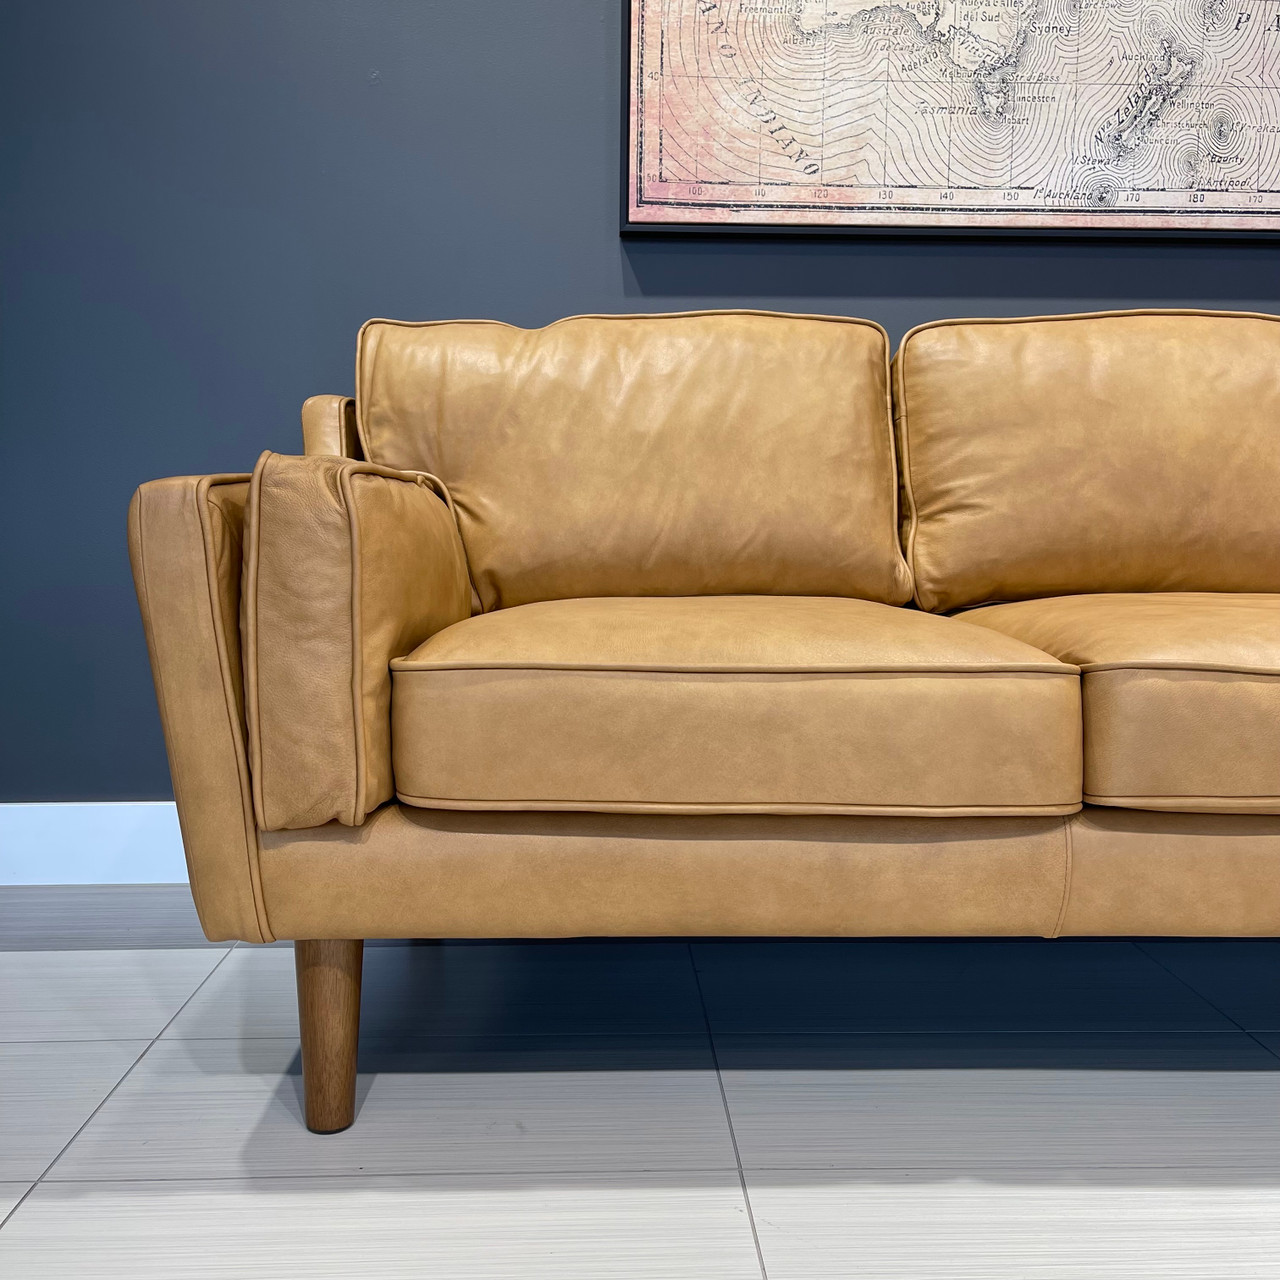 Beatnik 3 Seater Sofa - Courier Tan - McPhail's Furniture